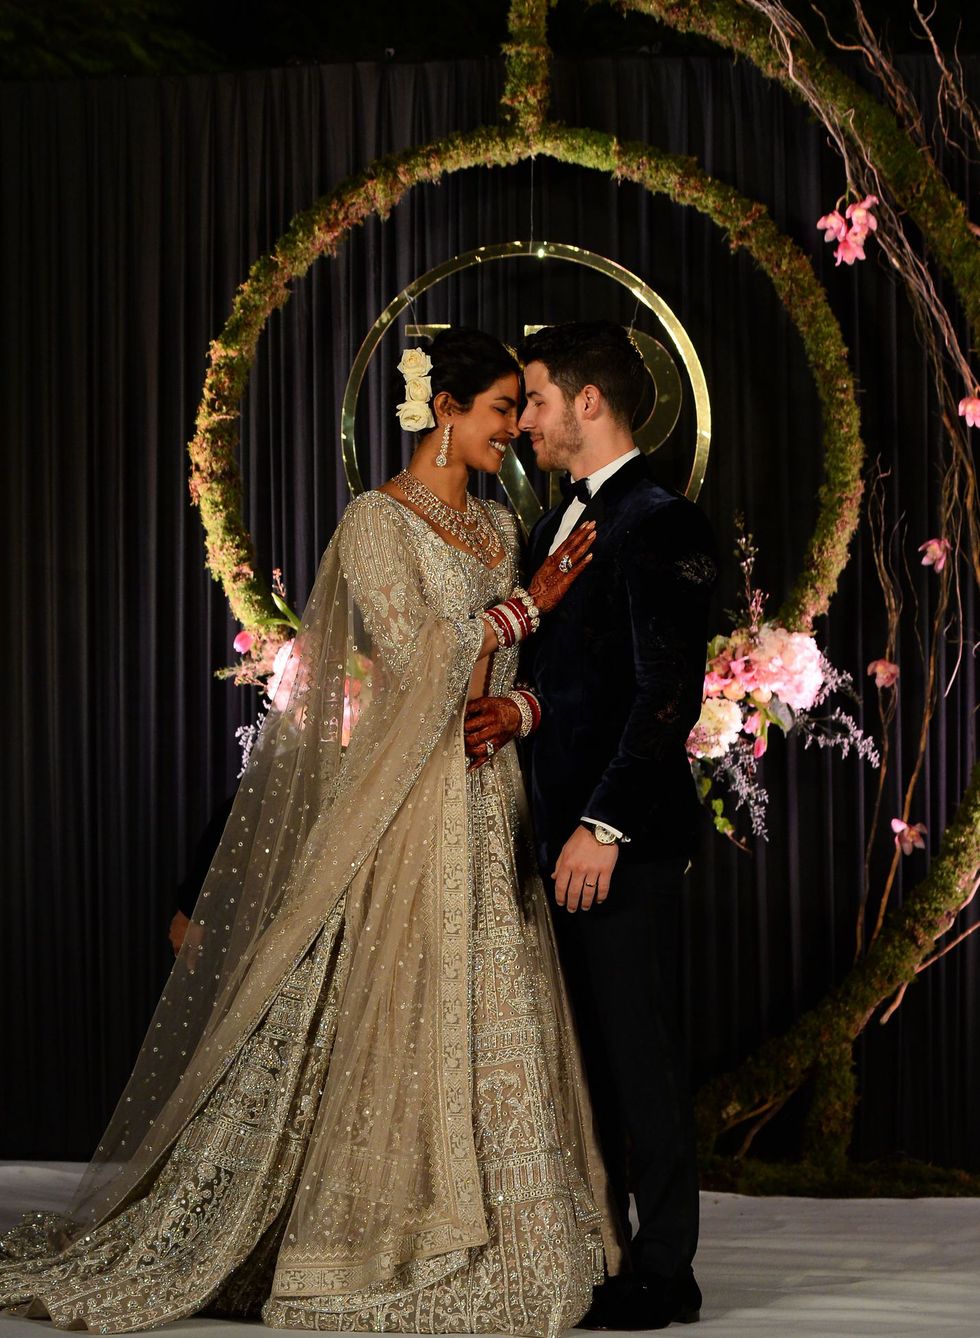 Priyanka Chopra and Nick Jonas Family Photos at Hindu Wedding